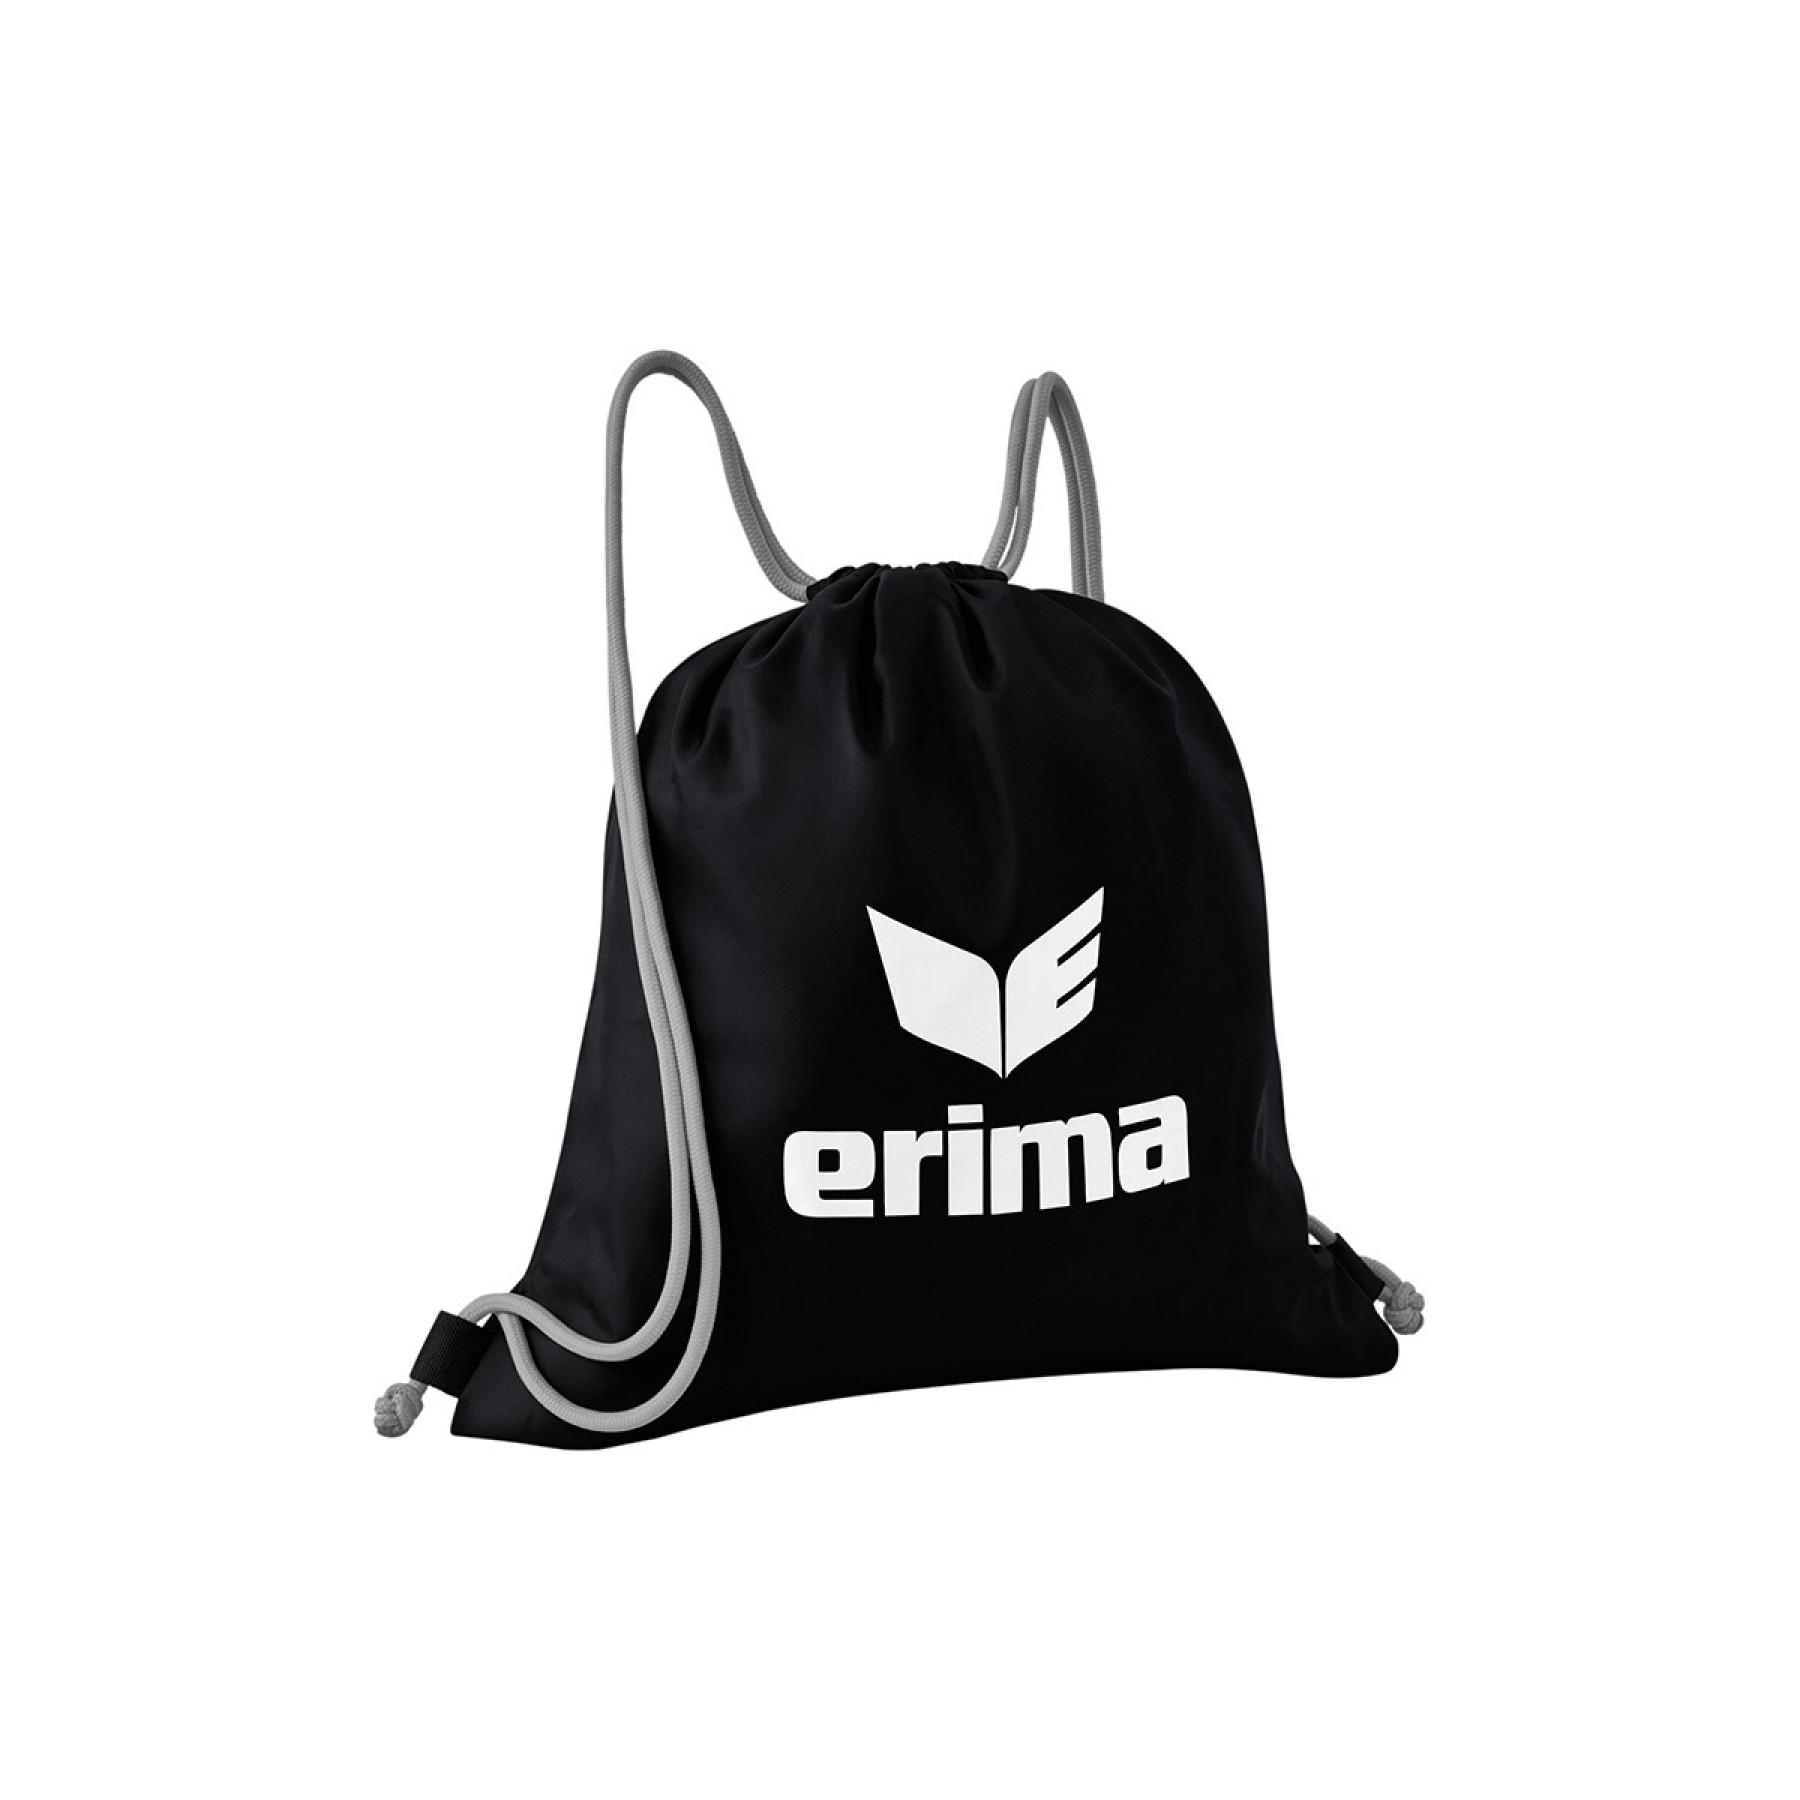 Erima Unisexs Spacious Shoe Bag Black